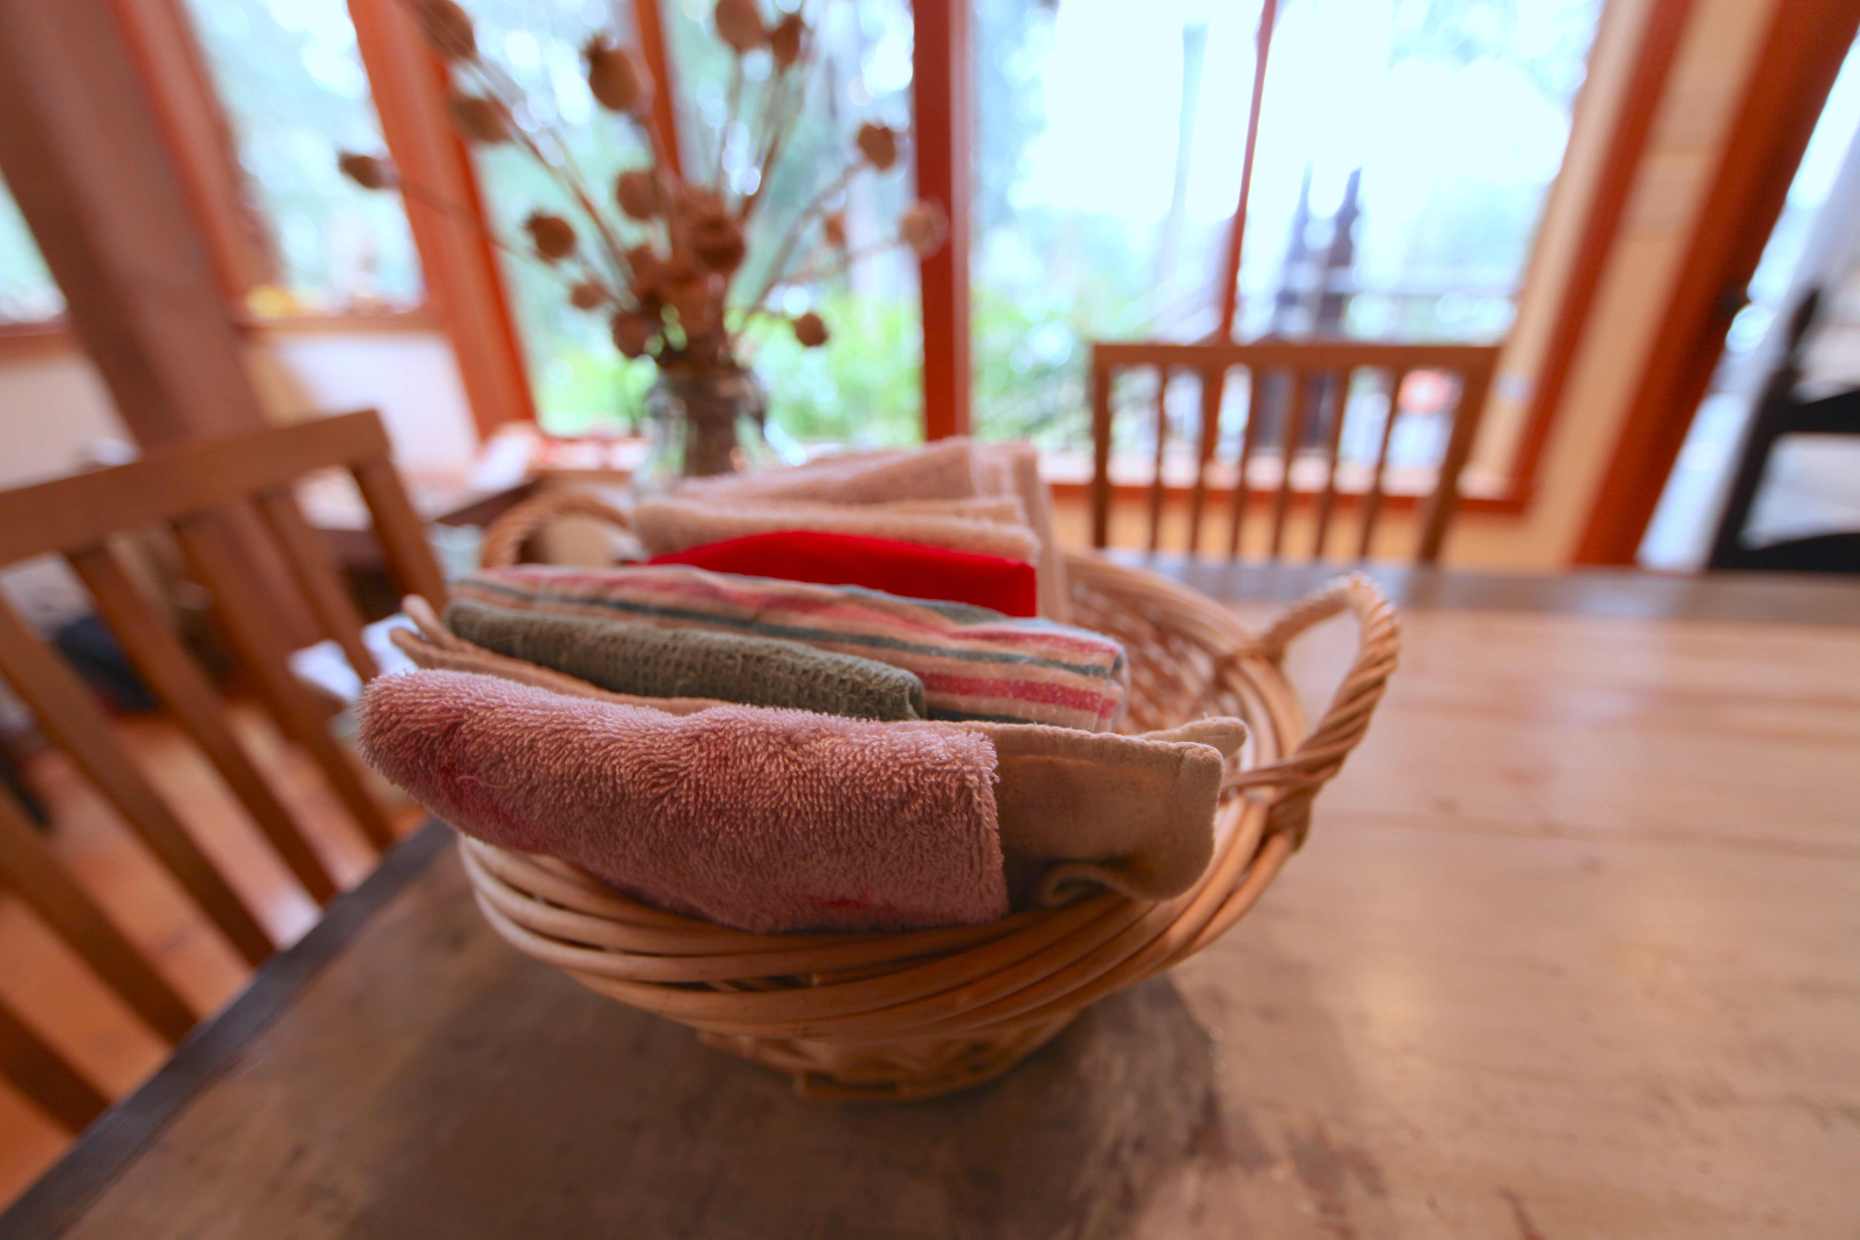 A few good rags in a basket = alternative to paper towels. Photo © Liesl Clark